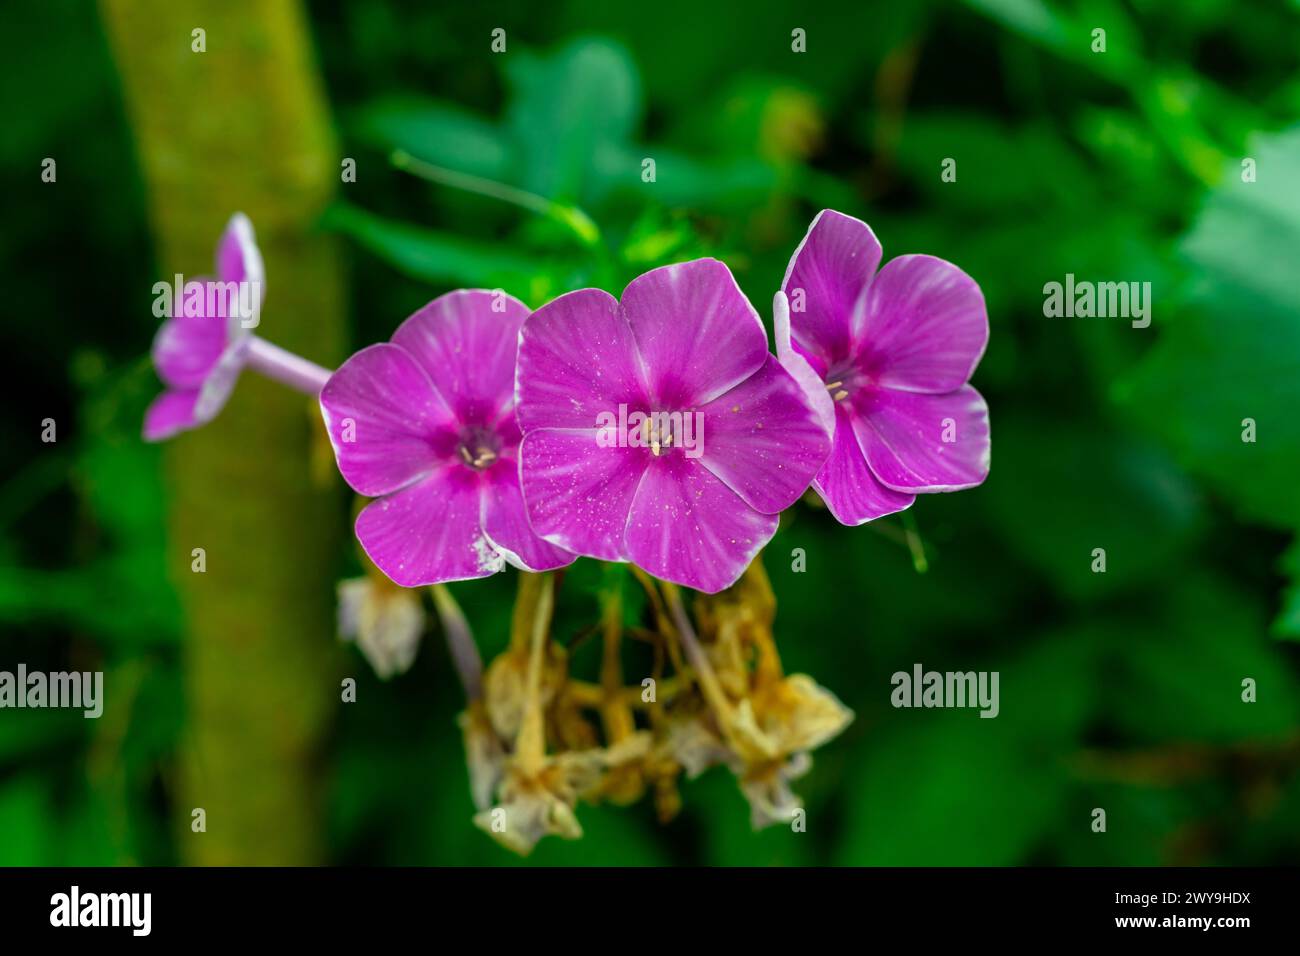 Purple phlox flowers on a green background. Stock Photo